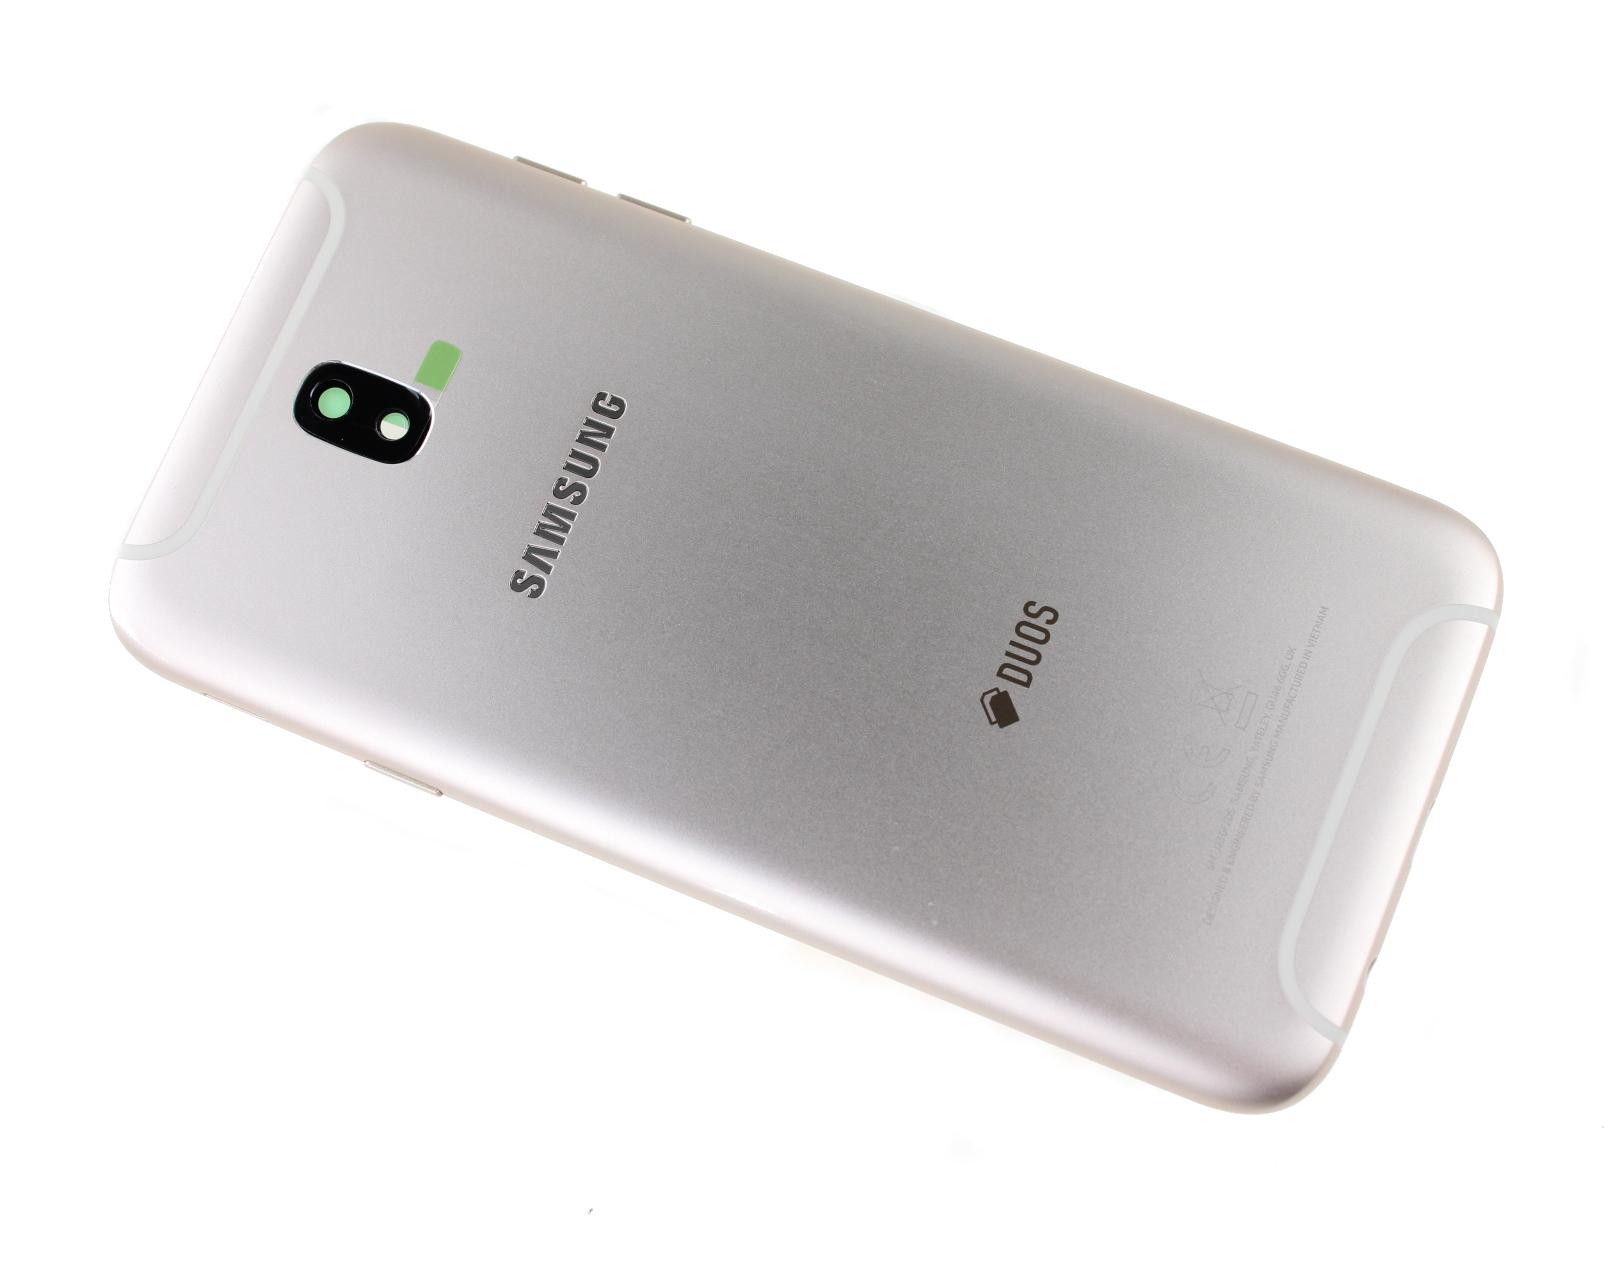 Originál kryt baterie / korpus Samsung Galaxy J7 2017 SM-J730 zlatý